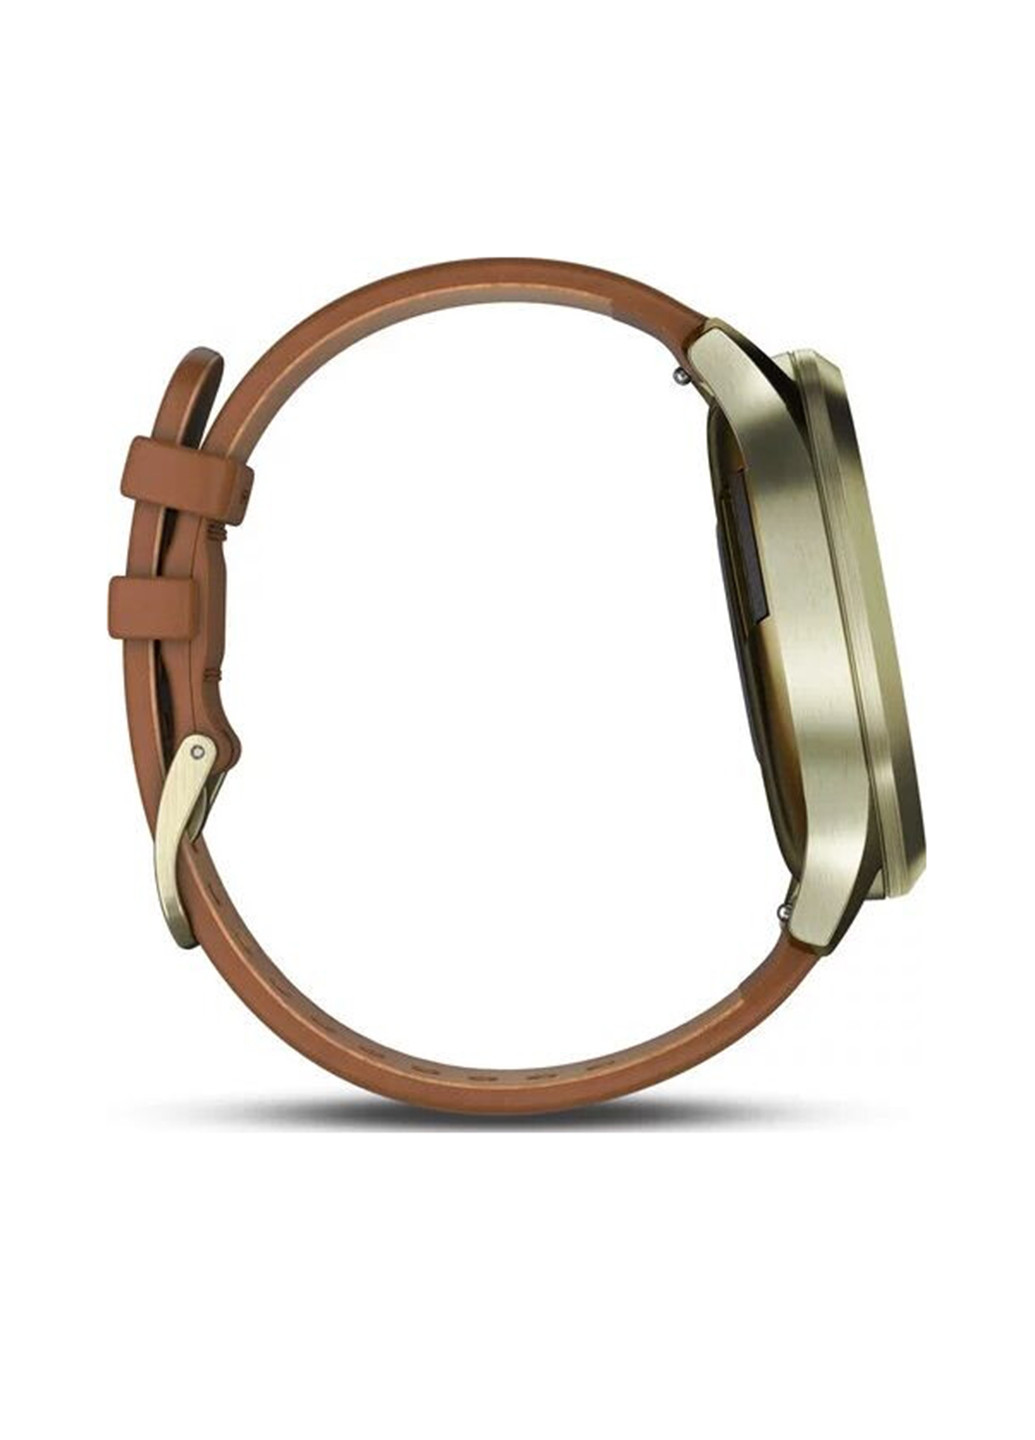 Смарт-годинник Garmin vivomove hr premium gold with light brown leather band (151426571)